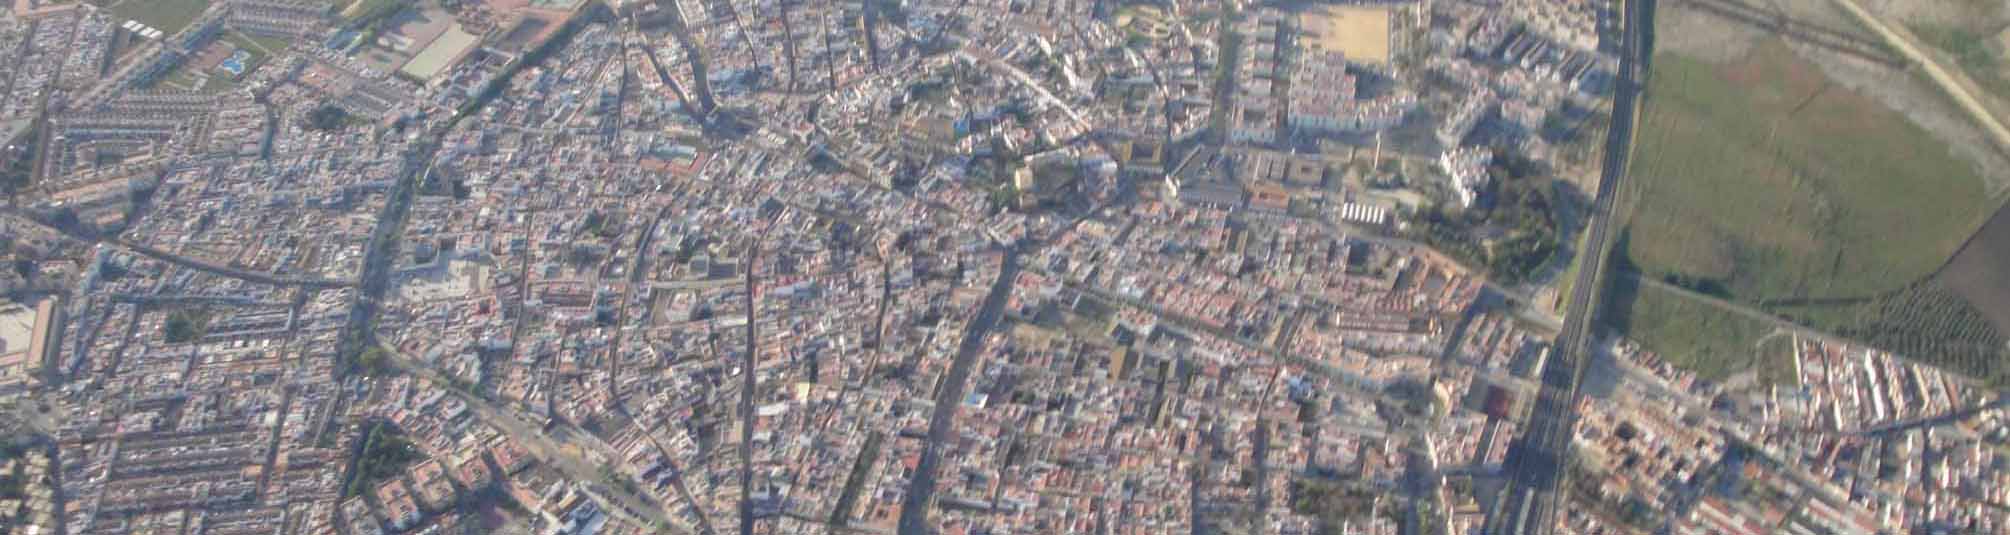 Vista aérea de la localidad de Utrera/ A.F.